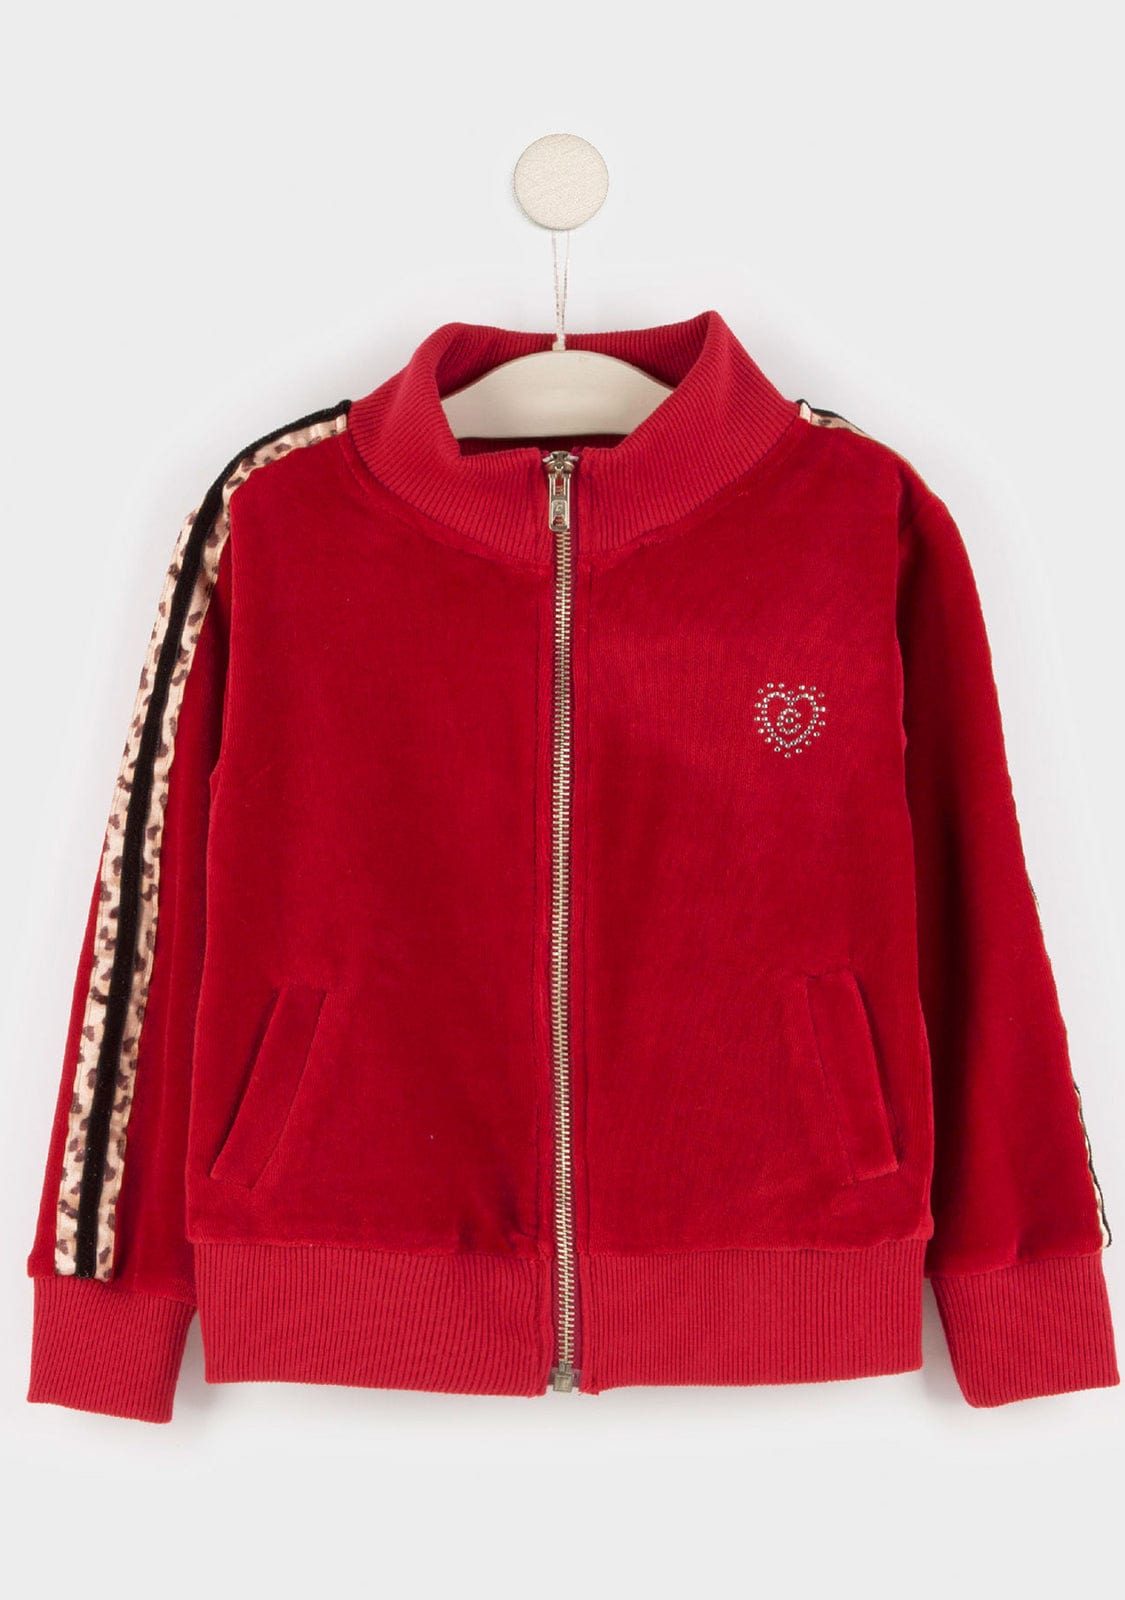 CONGUITOS TEXTIL Clothing Girl's Red Velvet Tracksuit Jacket